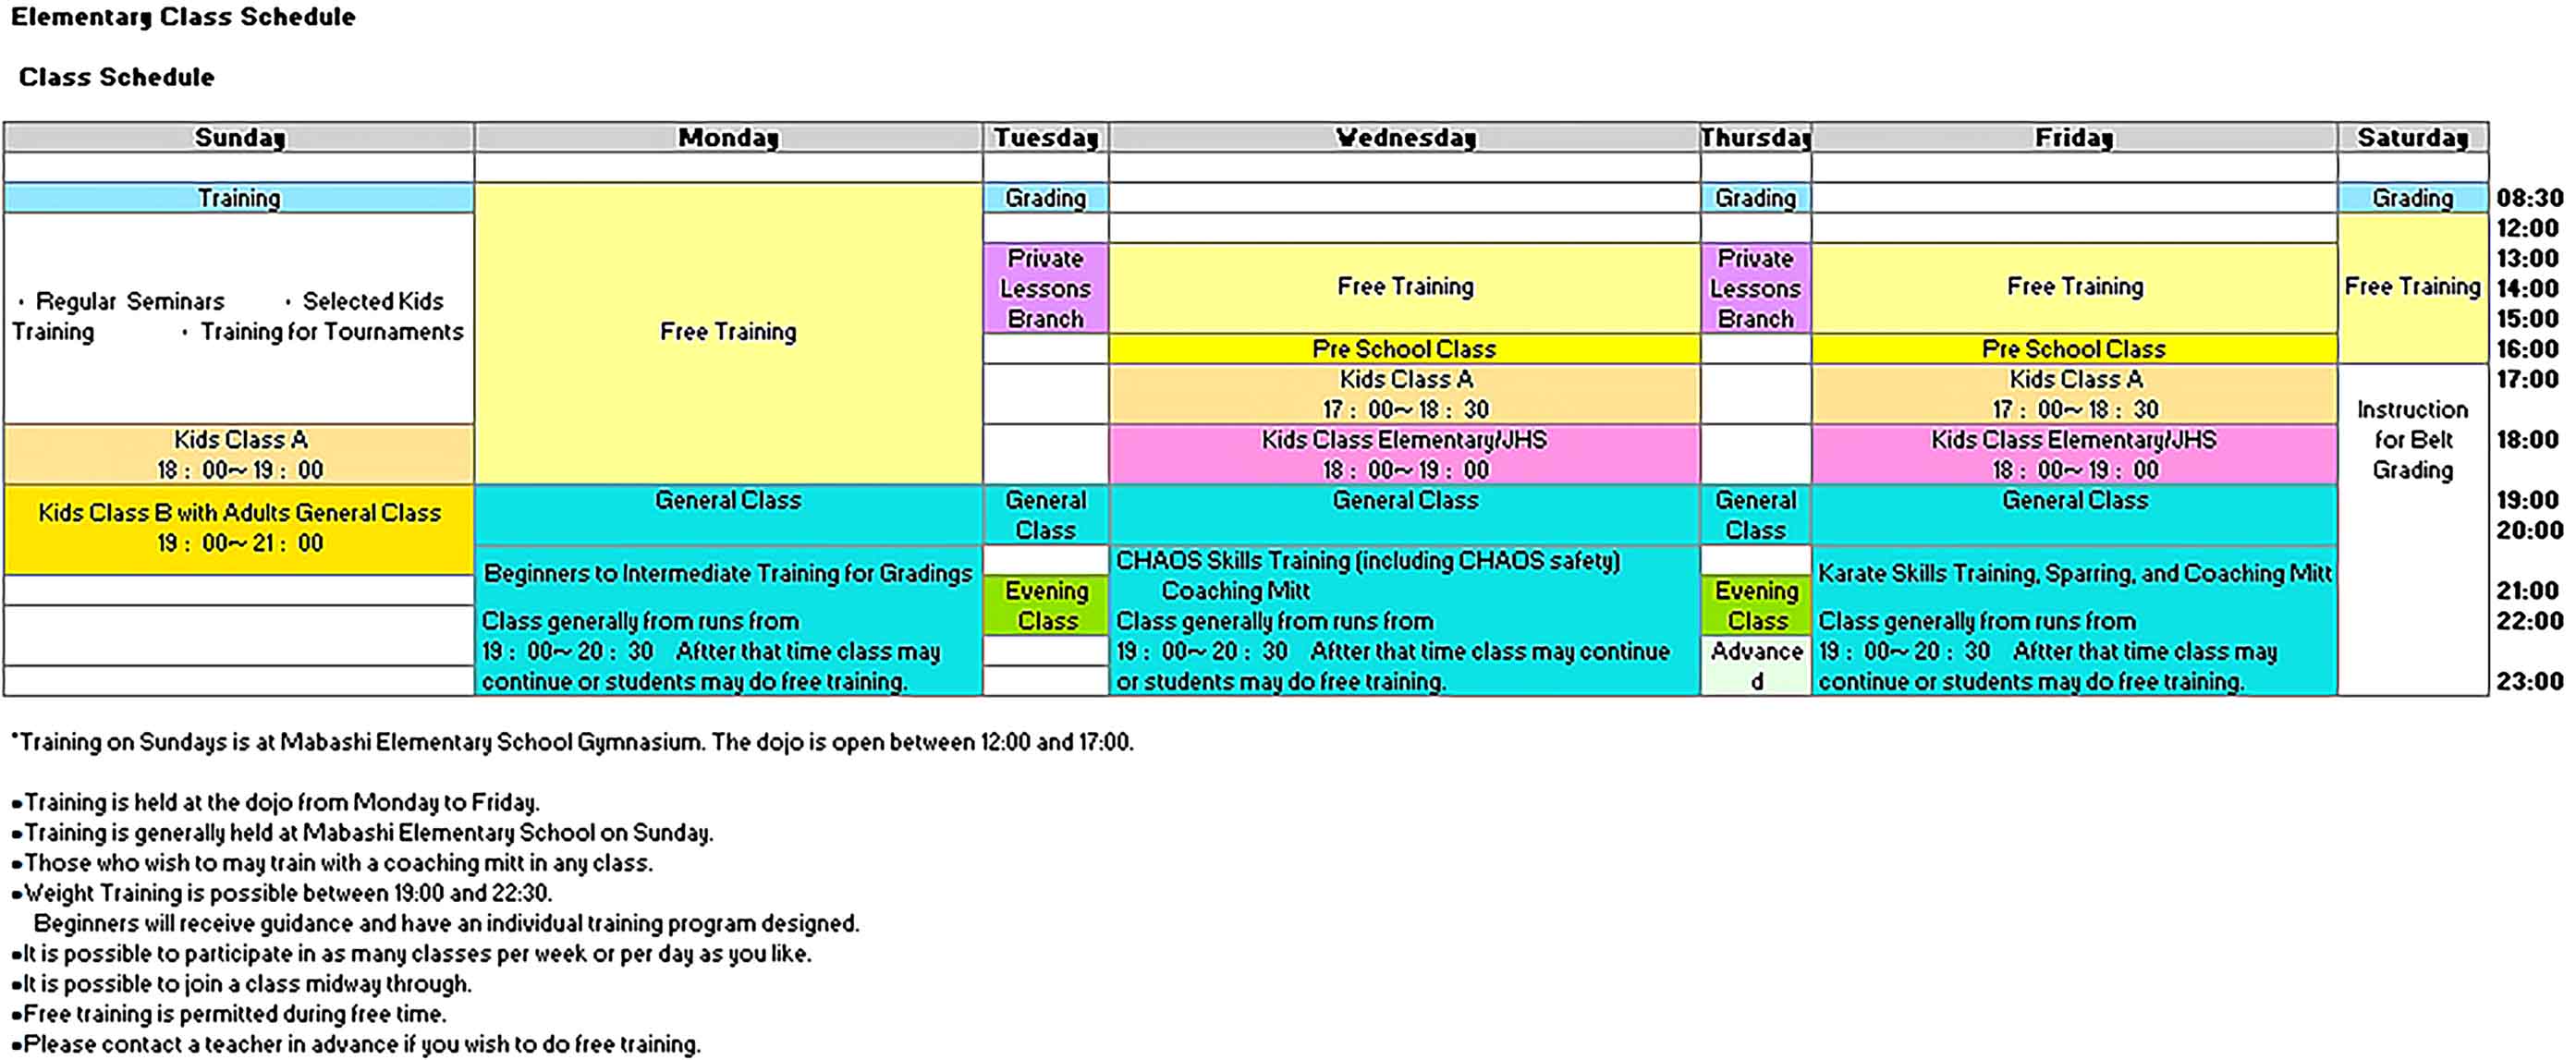 Template Elementary Class Schedule Sample